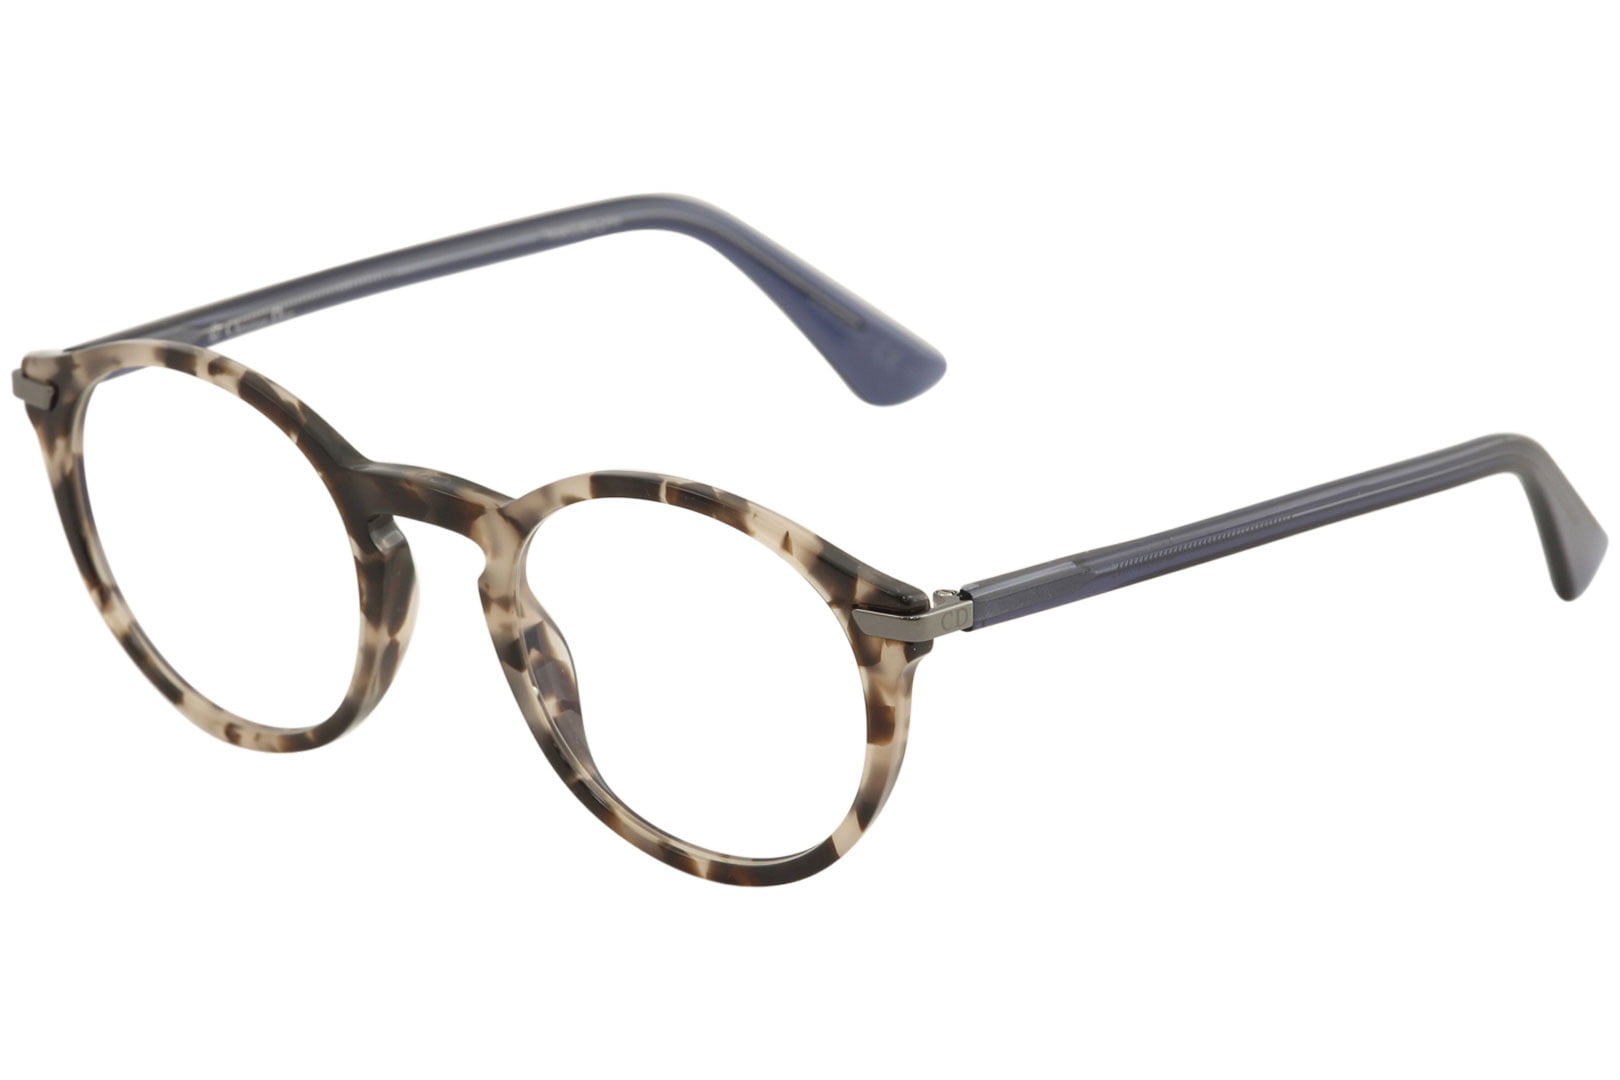 dior eyeglasses price